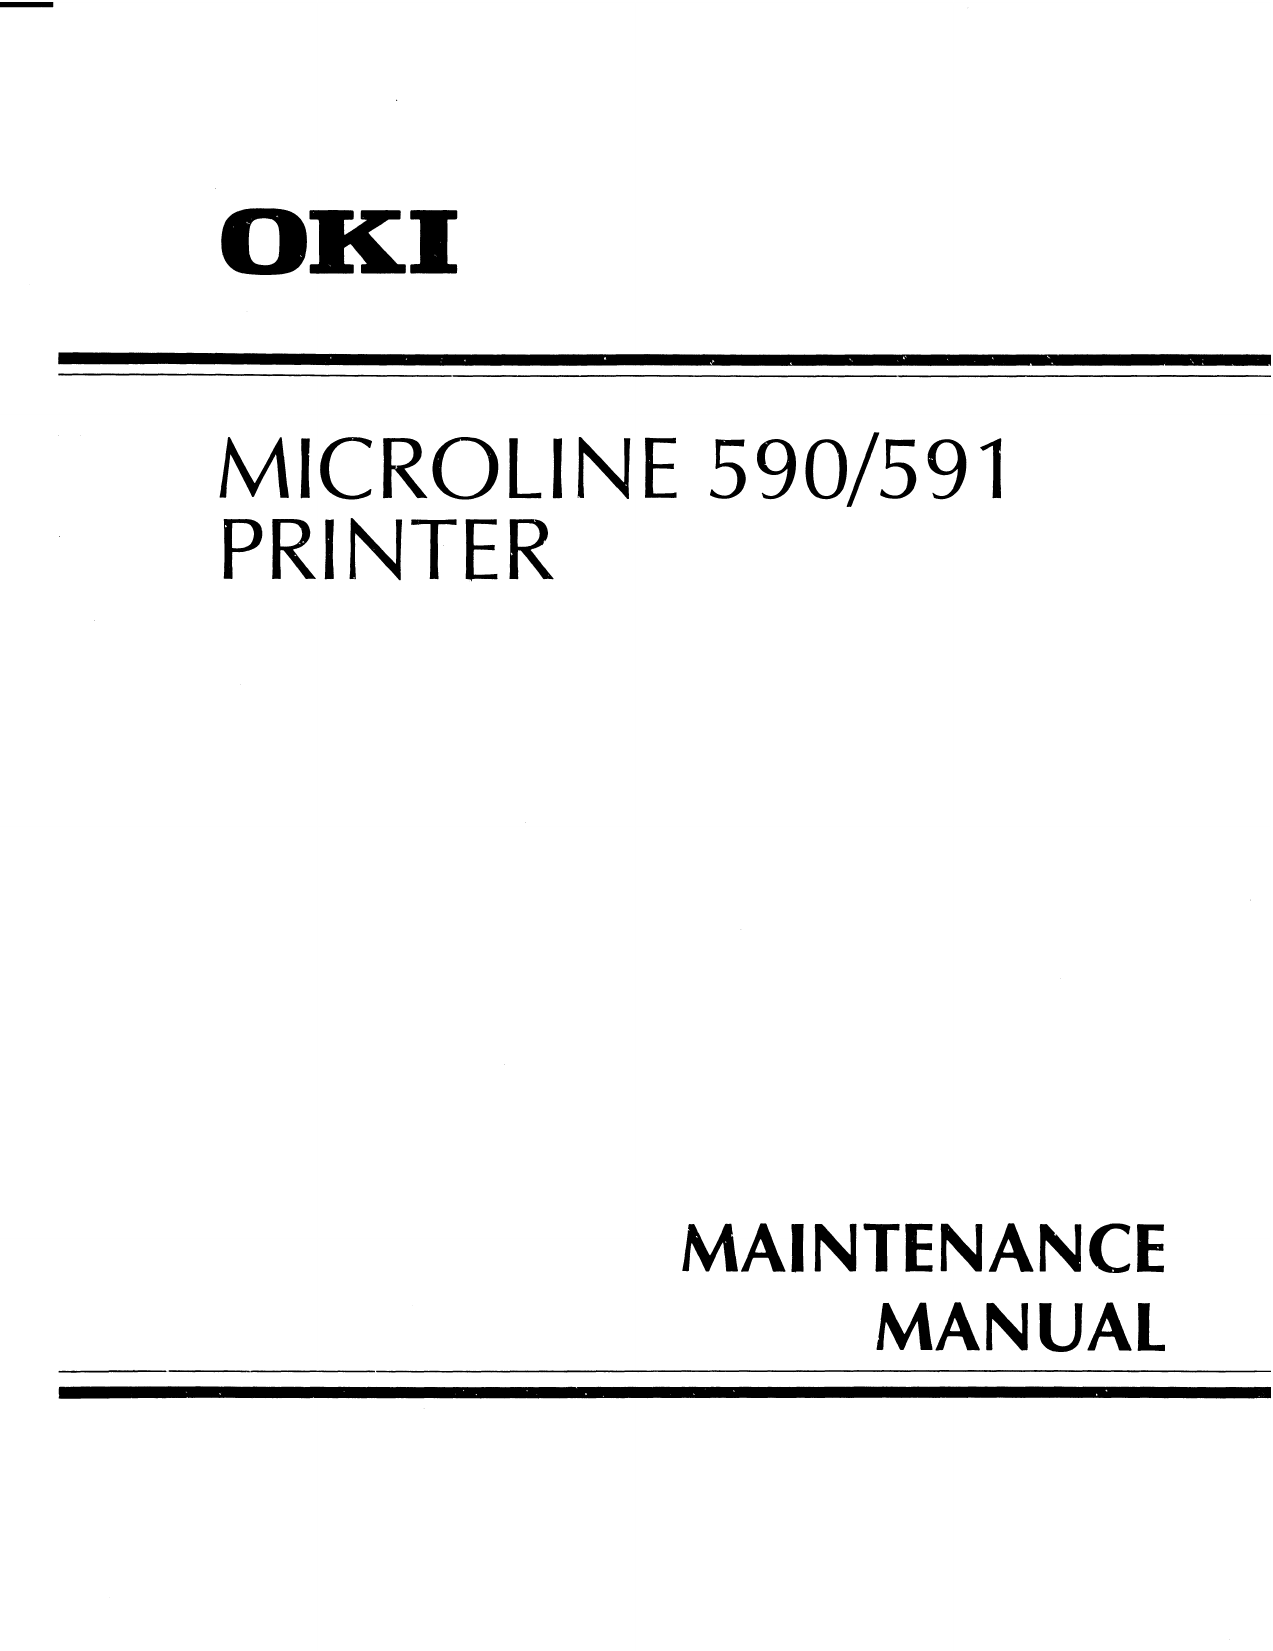 Okidata Microline 590, 591 dot matrix printer  service guide Preview image 1